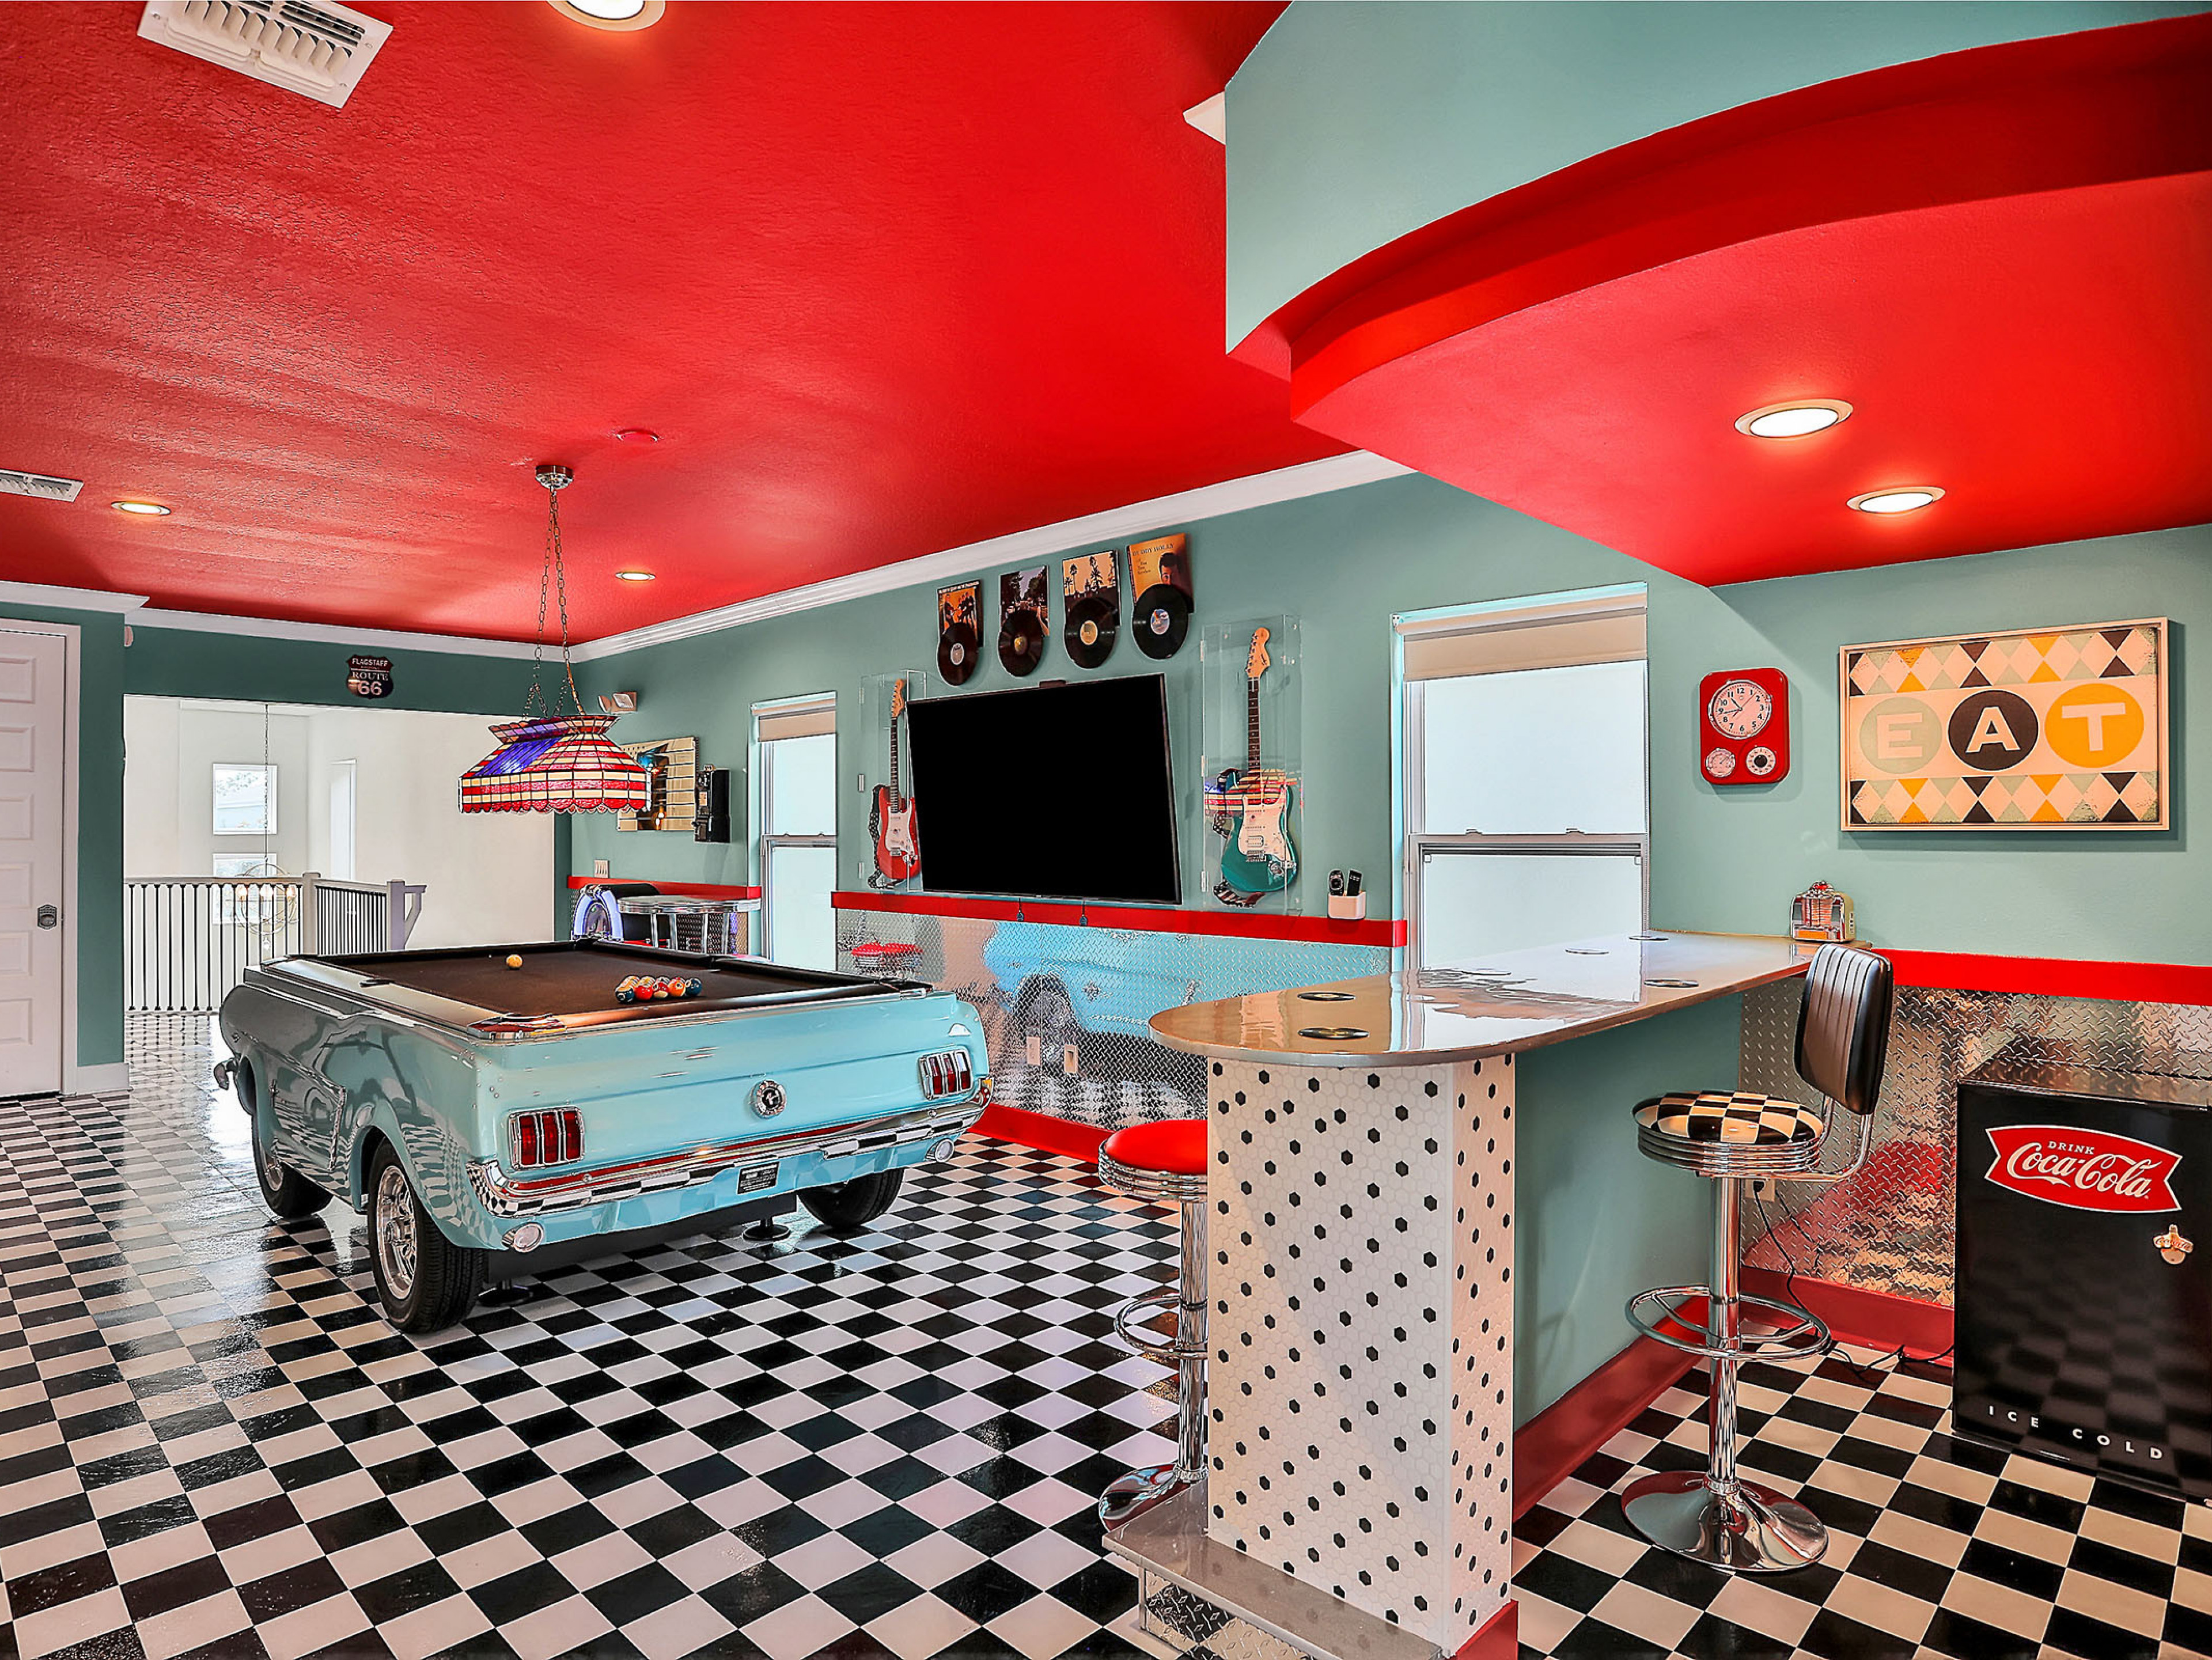 5 bedroom vacation rentals in Orlando Florida Reunion Resort 32 diner themed game room